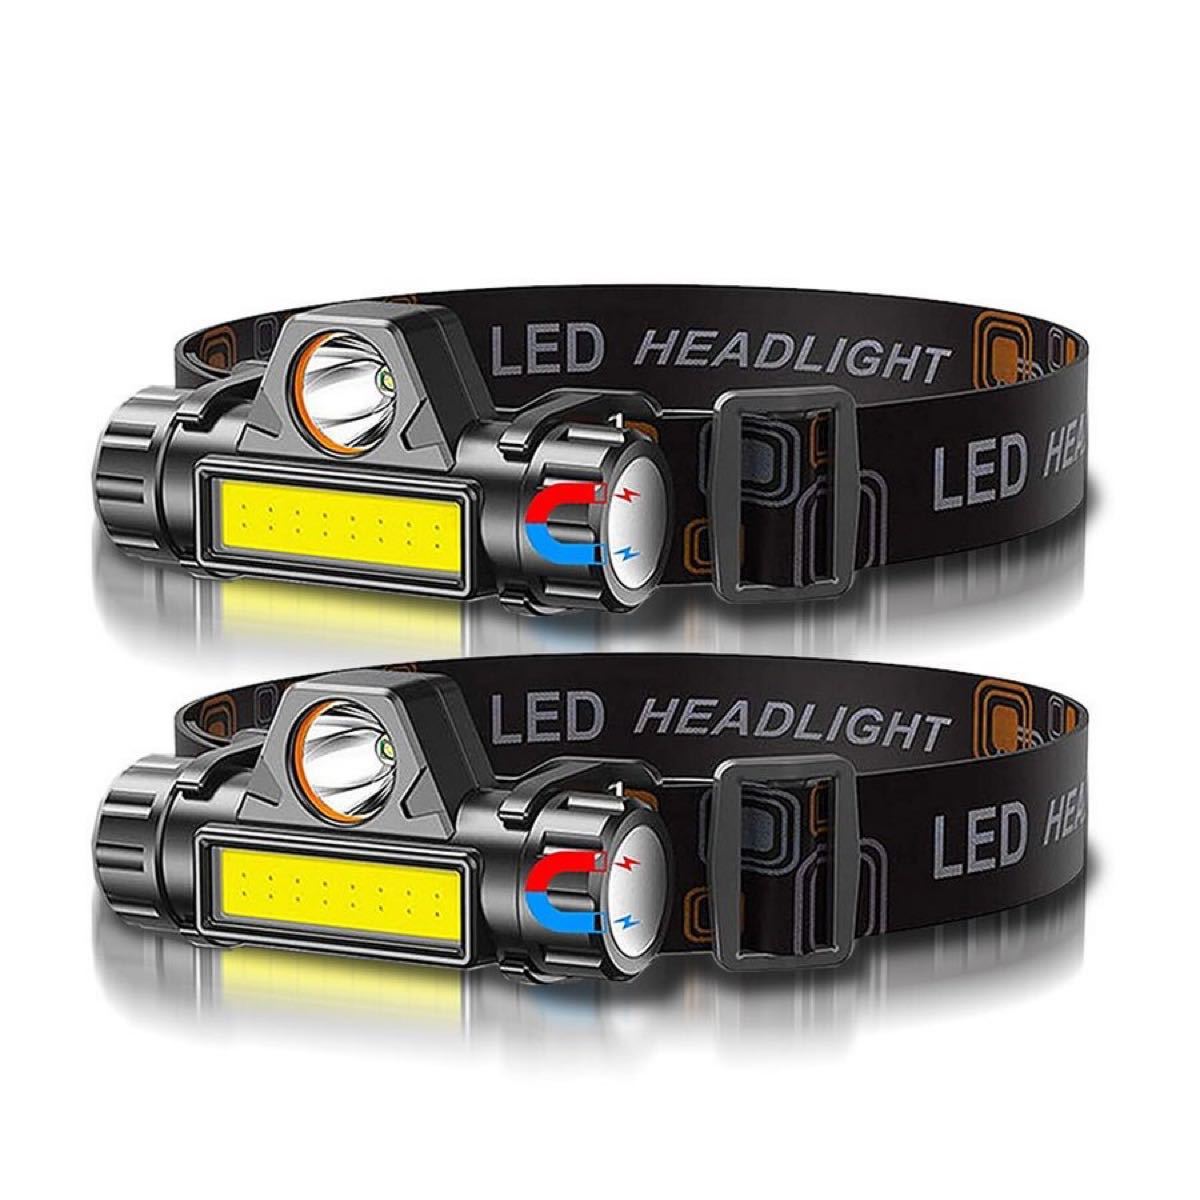 LED ヘッドライト 2台セット キャンプ 夜釣り アウトドア 夜間作業 USB充電 ヘッドランプ